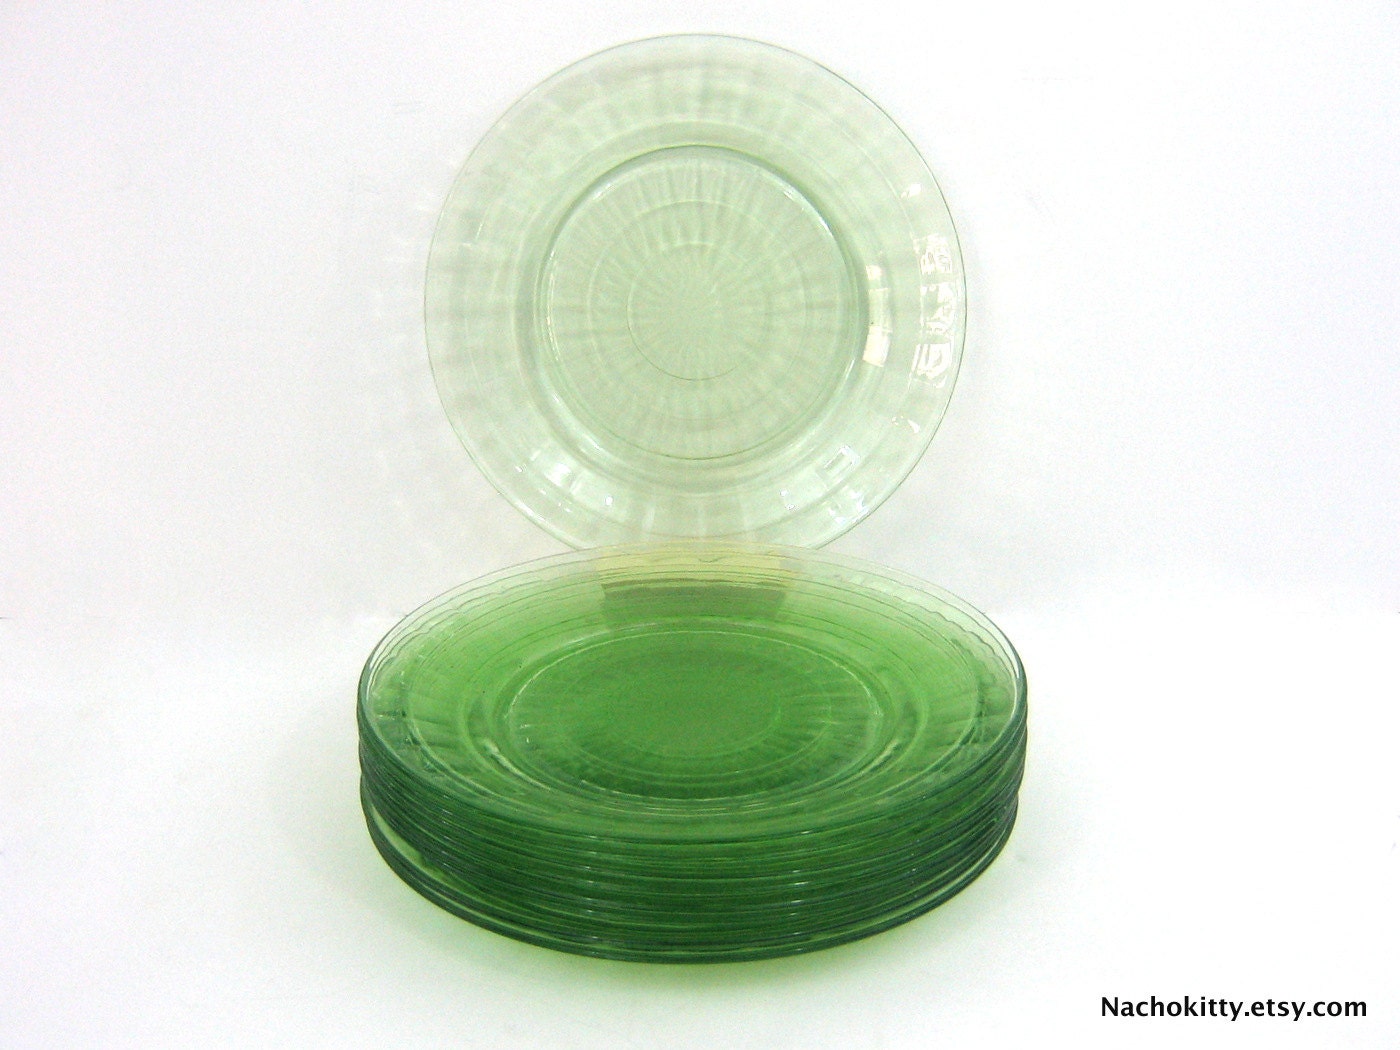 Plate Set Green Depression Glass Optic 1930s - Nachokitty